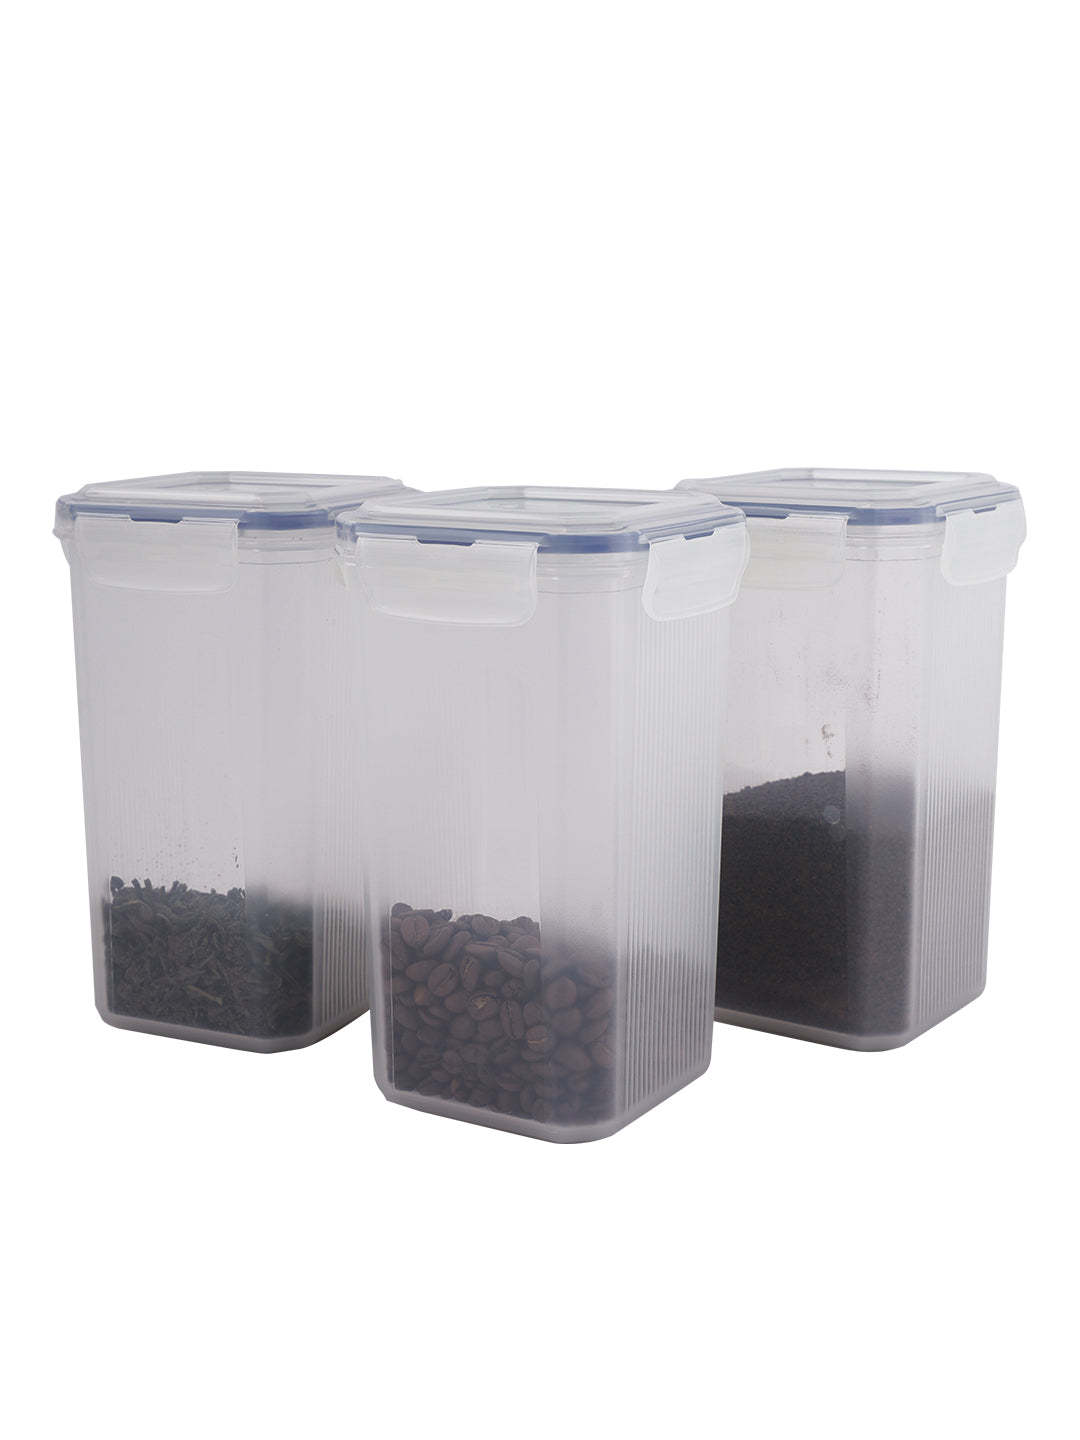 Tea Leaf Container 1.2LTR - CLASSIC SET